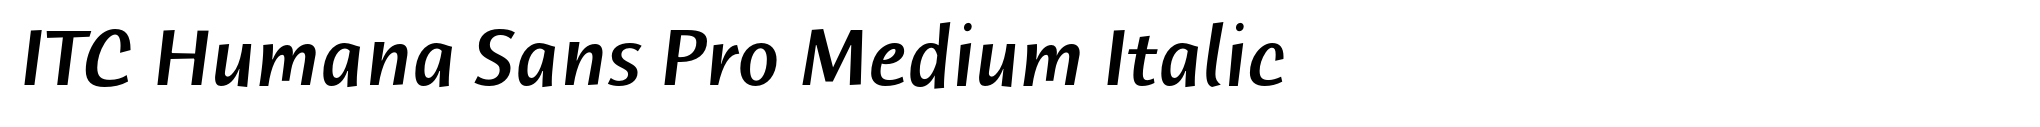 ITC Humana Sans Pro Medium Italic image